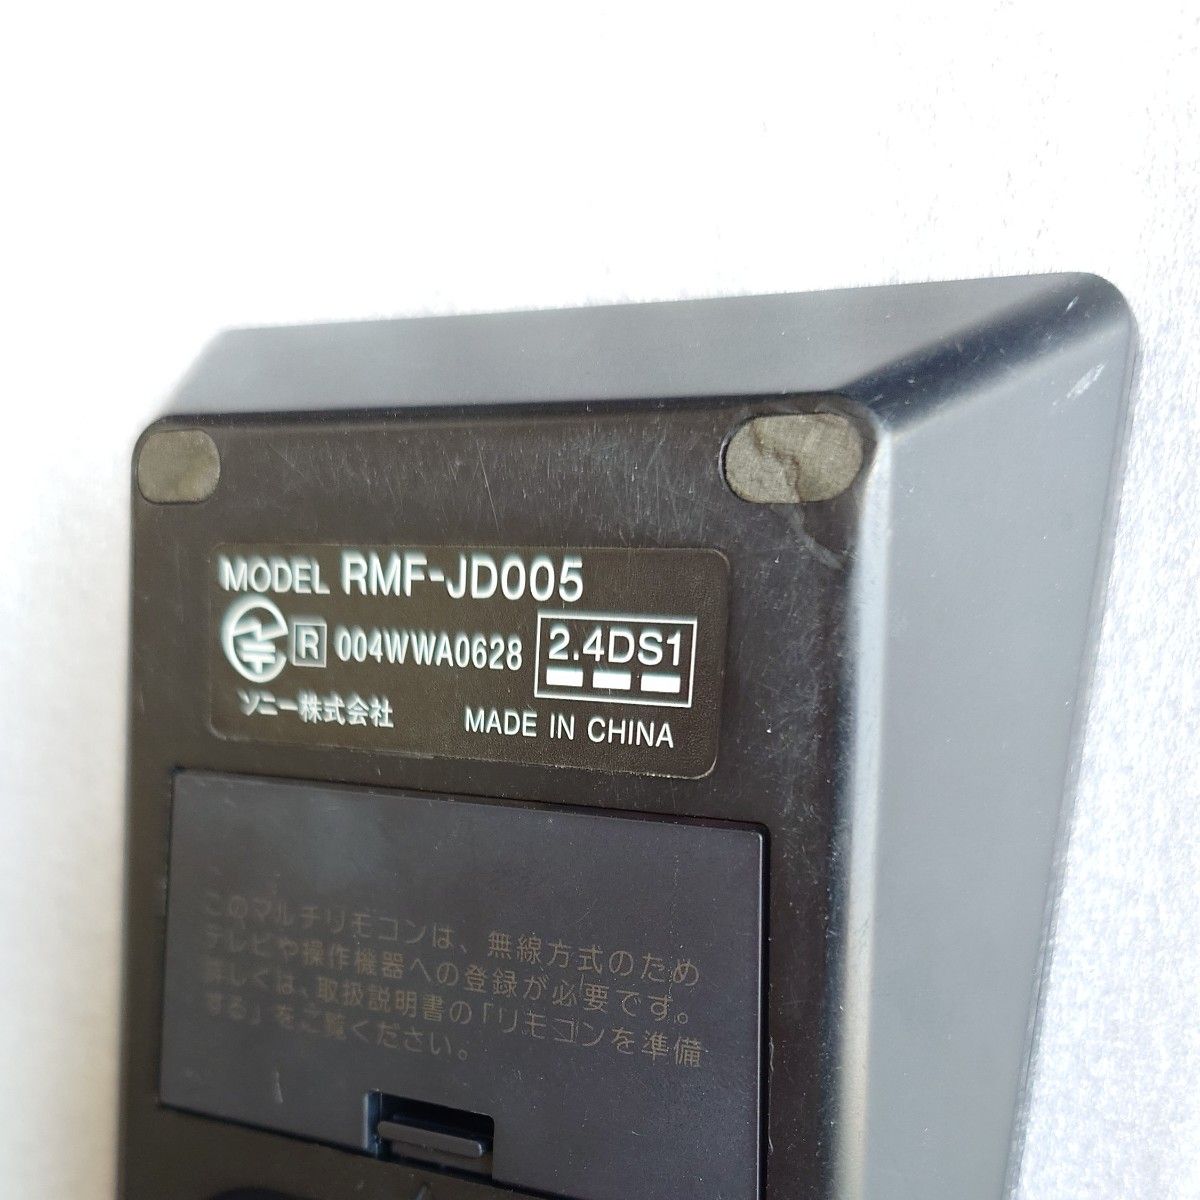 SONY純正リモコン RMF-JD005ソニーテレビ リモコンボタン発光確認済み